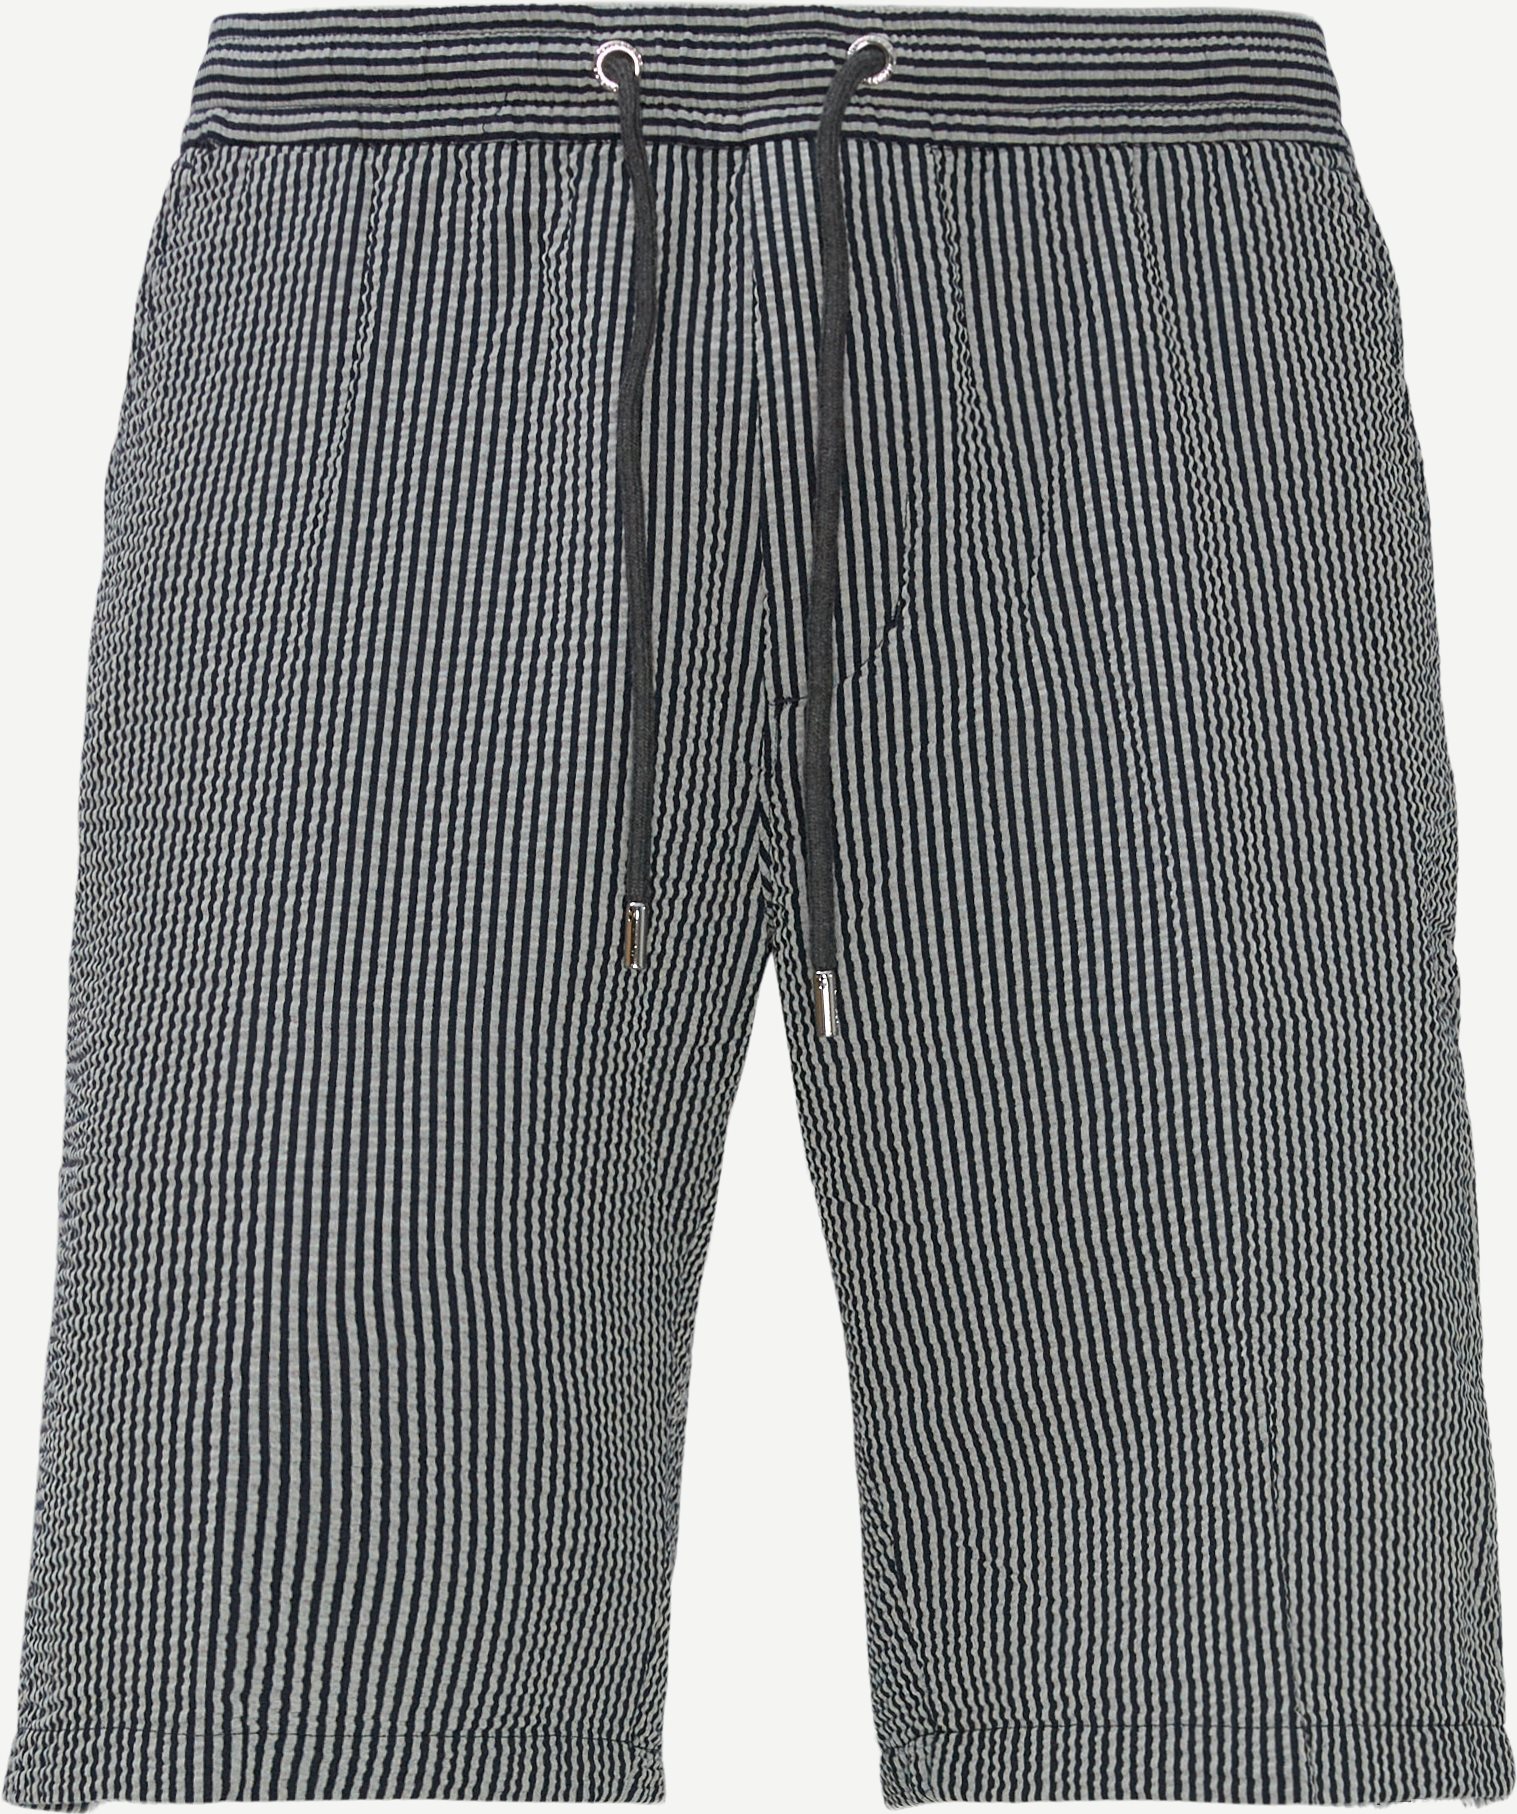 Harlem Ithaca Stripe Shorts - Shorts - Regular fit - Blå